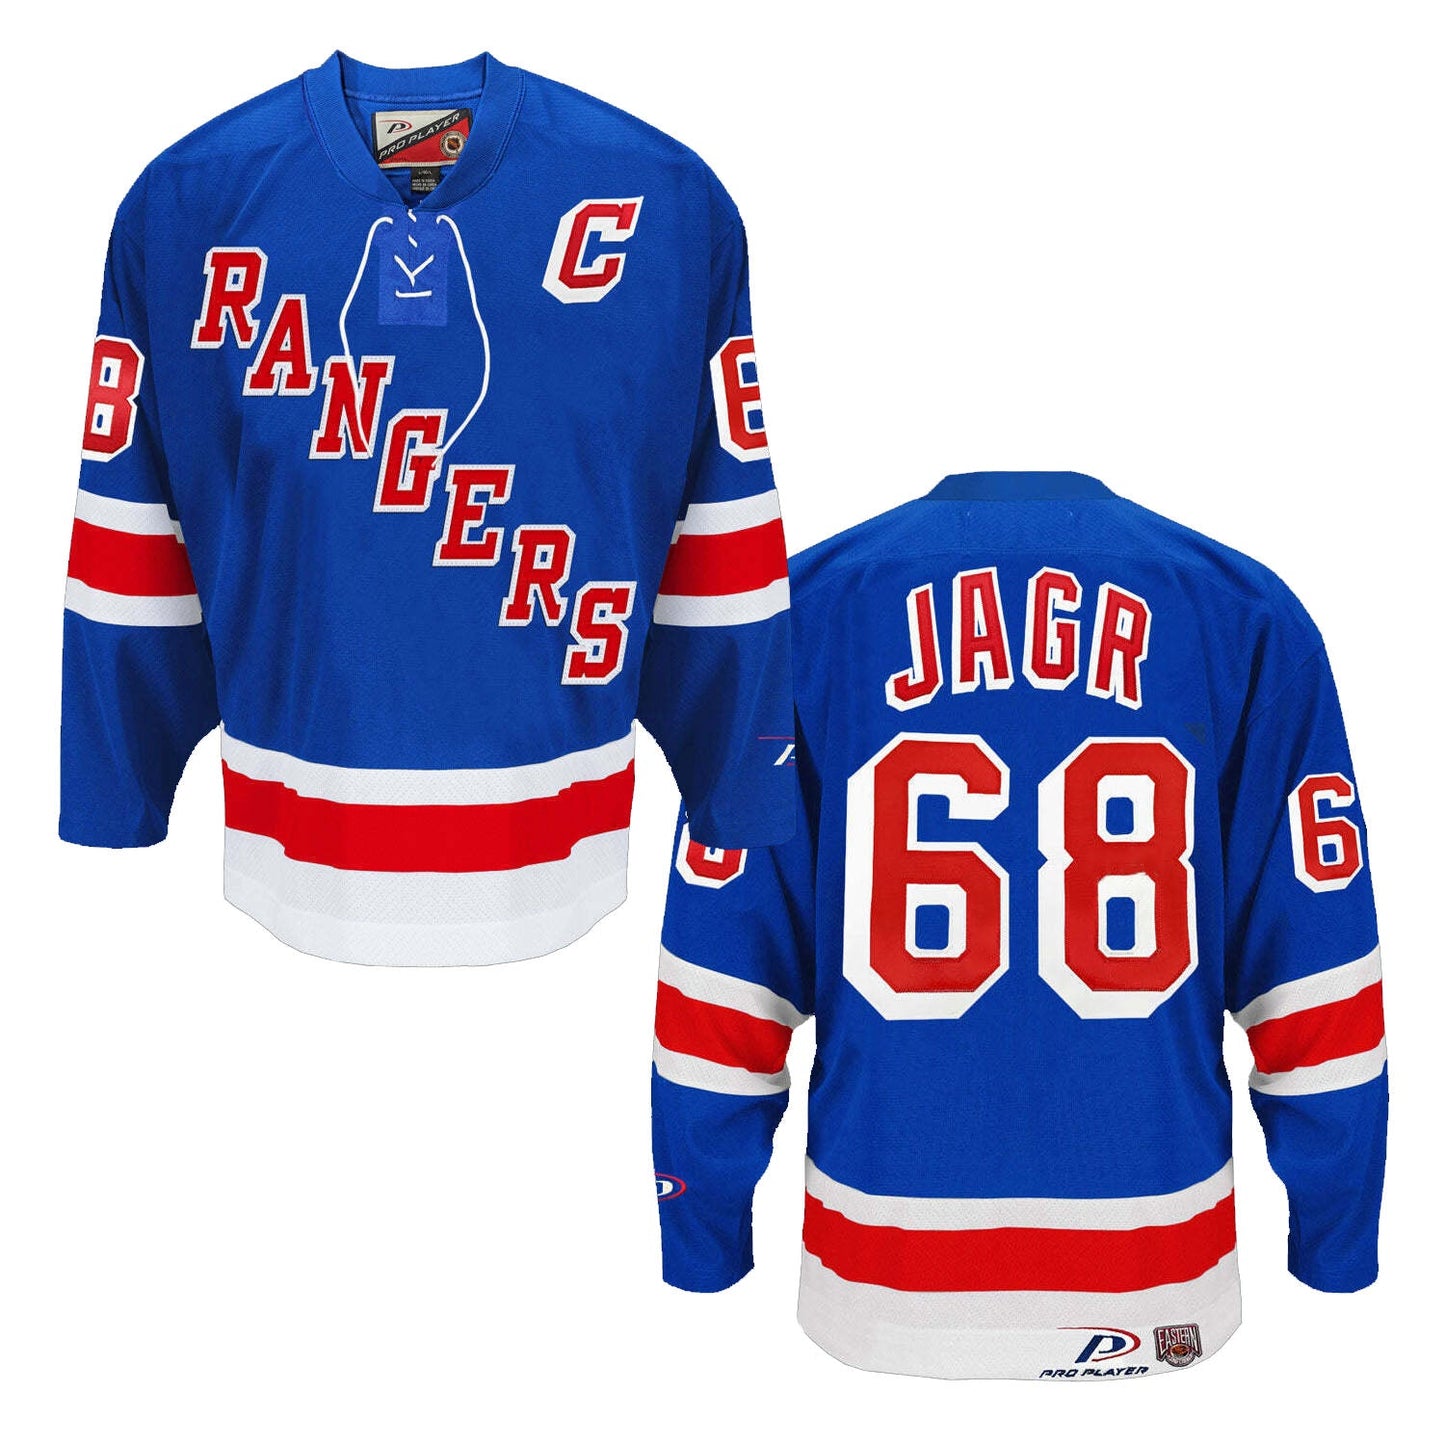 NHL Jaromir Jagr New York Rangers 68 Jersey